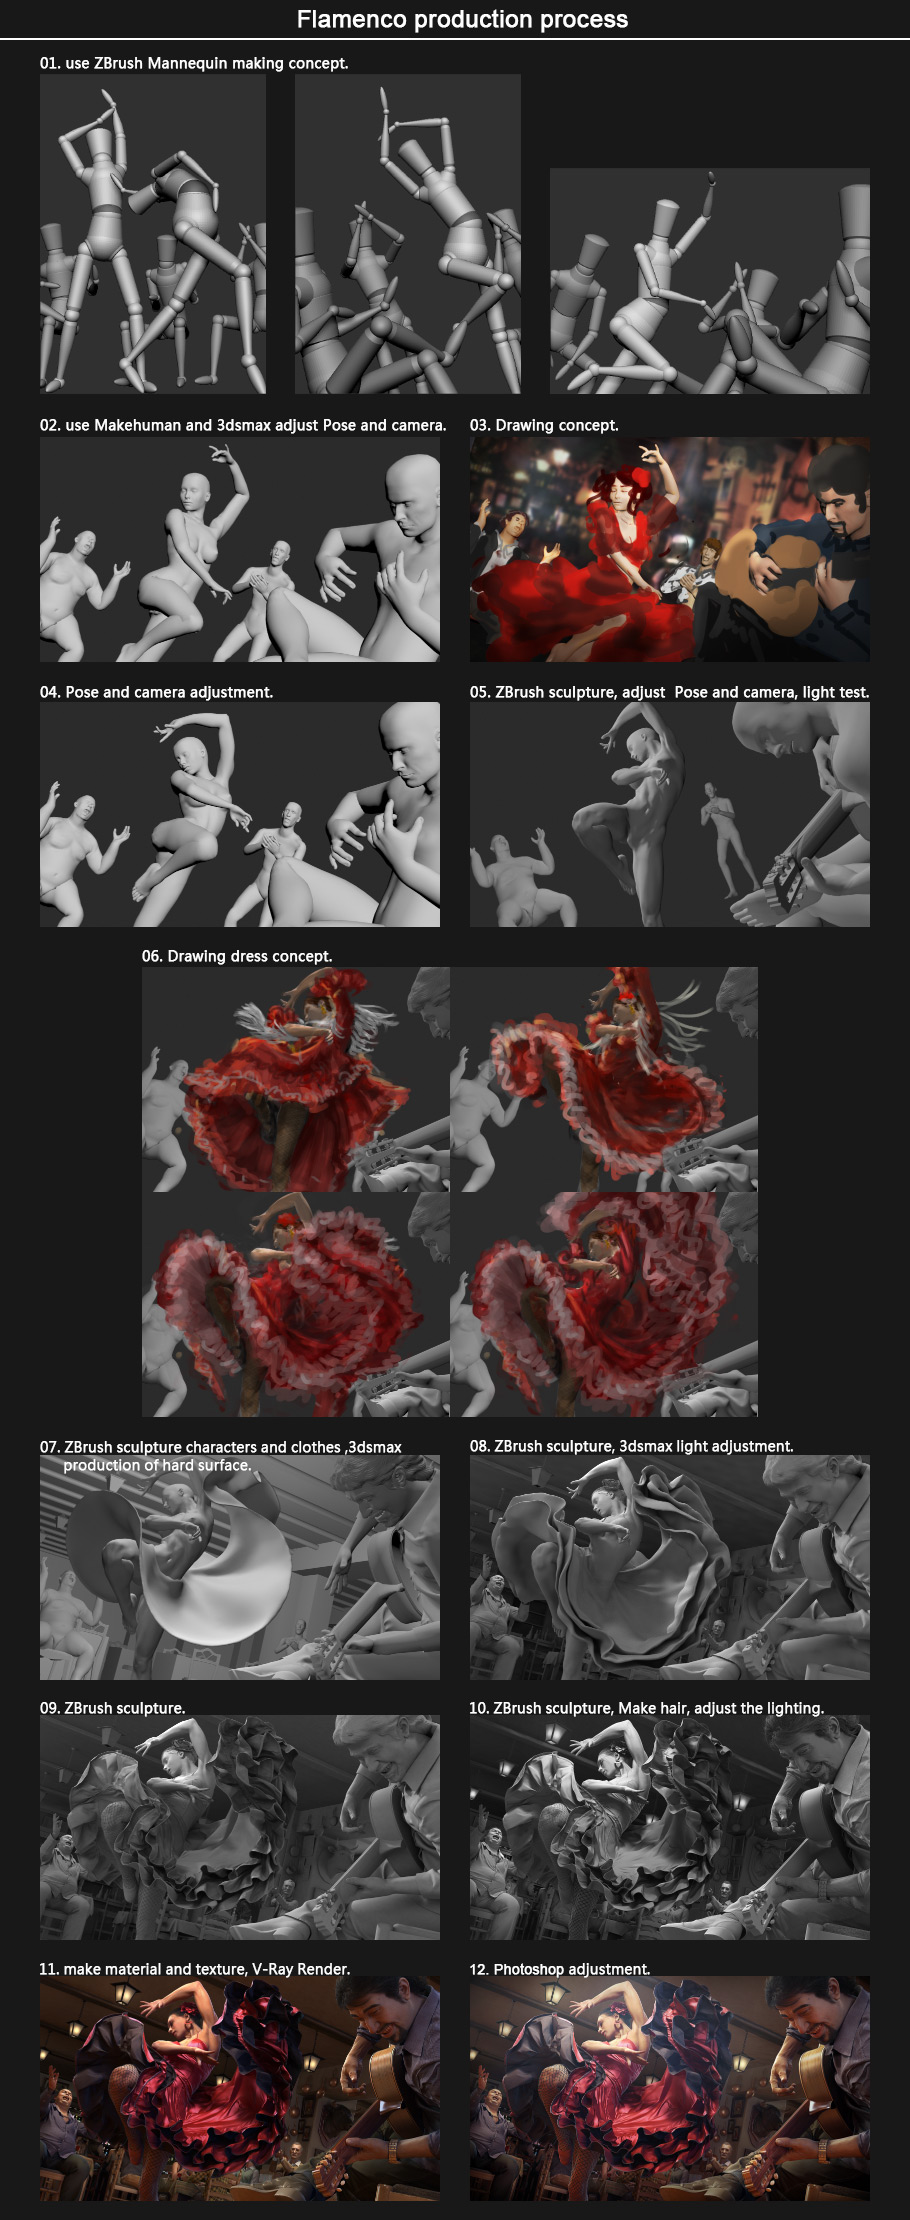 Flamenco_production_process.jpg